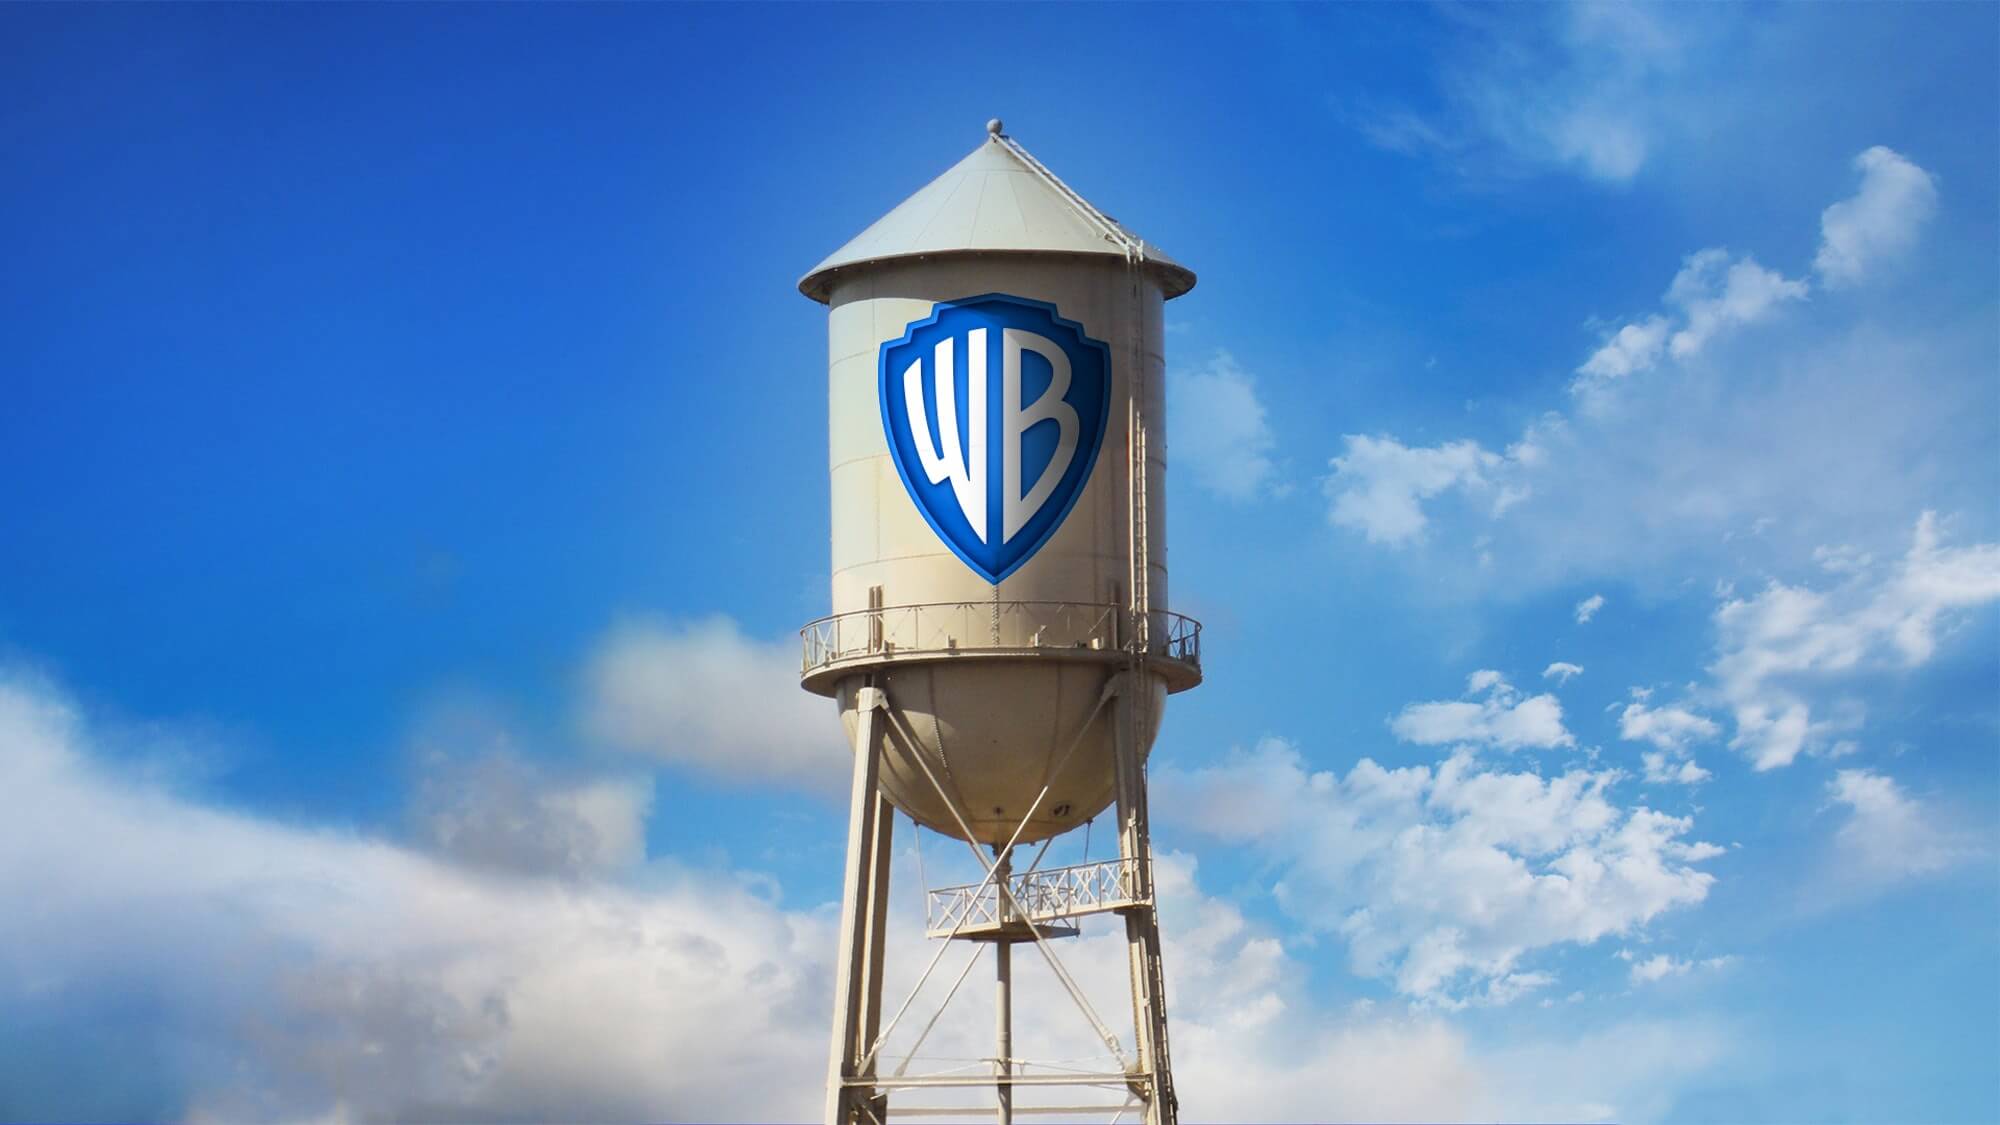 Warner Brothers mission statement